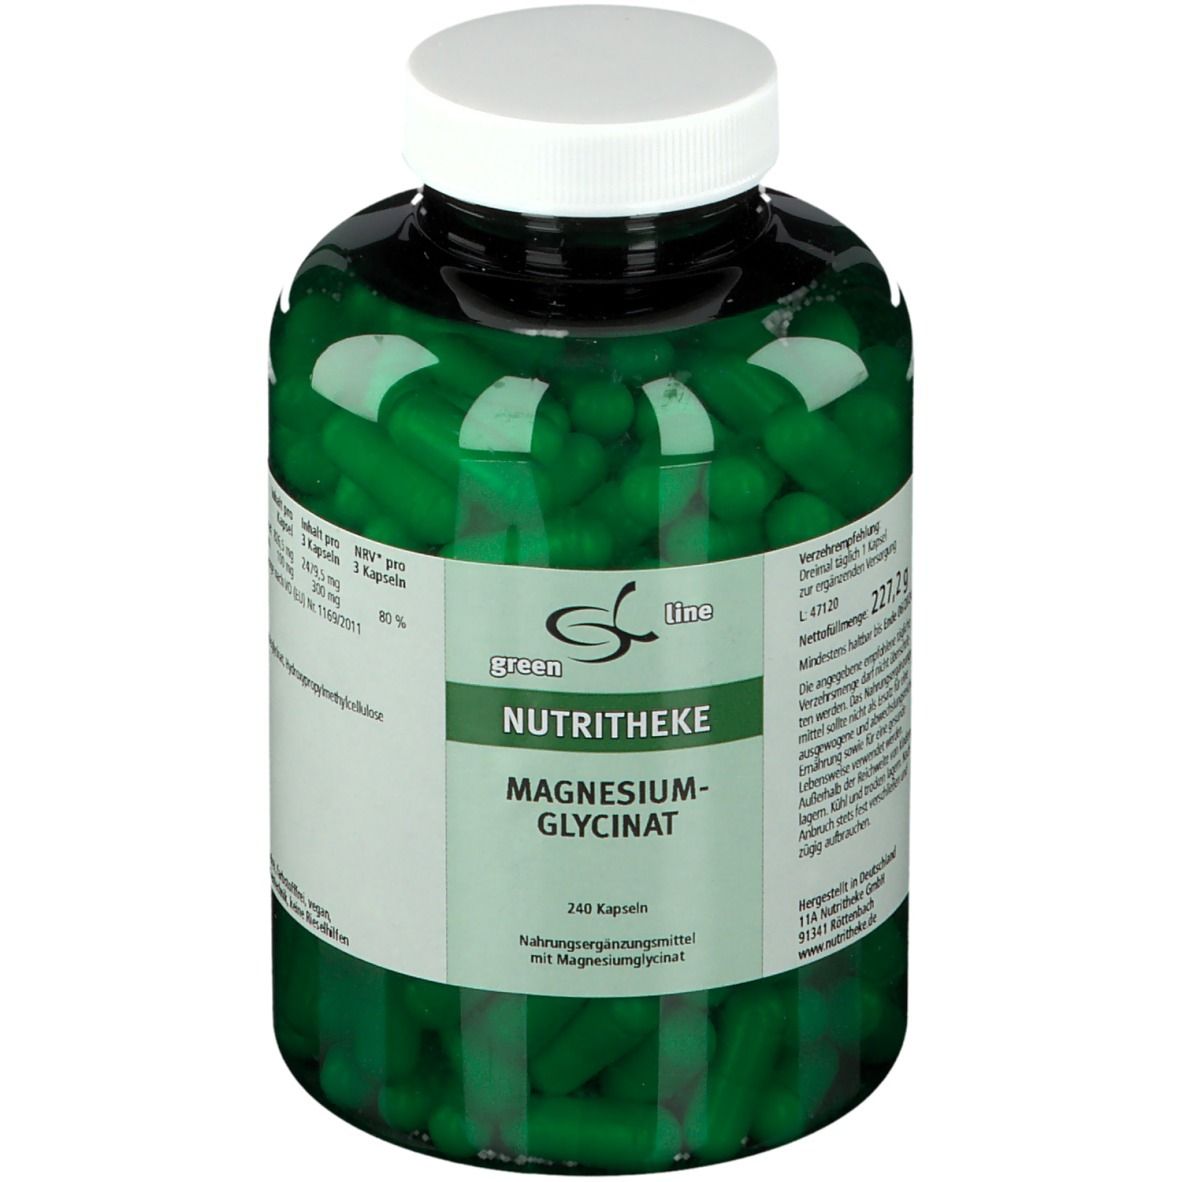 11 A Nutritheke GmbH green line Magnesiumglycinat